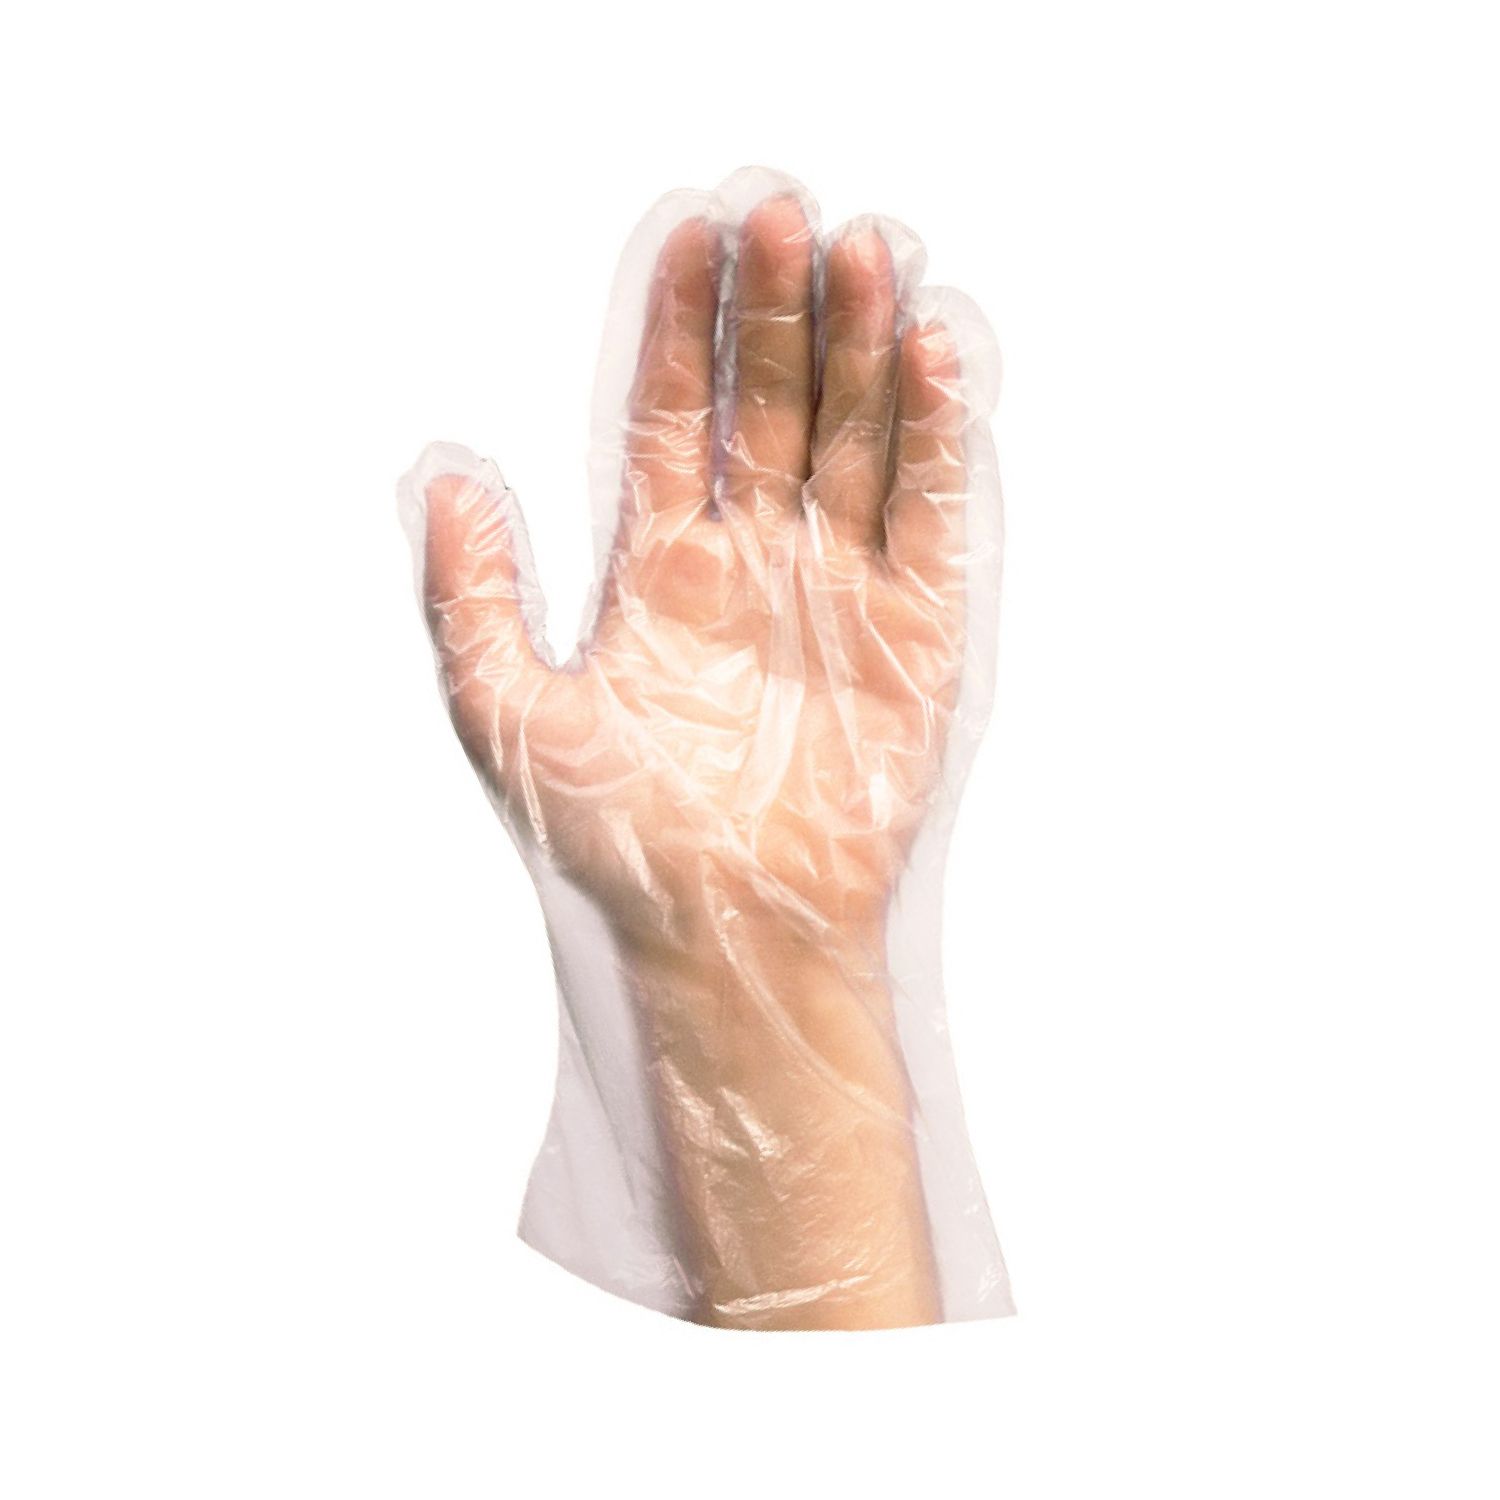 Handschuh (LDPE) Einweg transparent L - 100 Stück